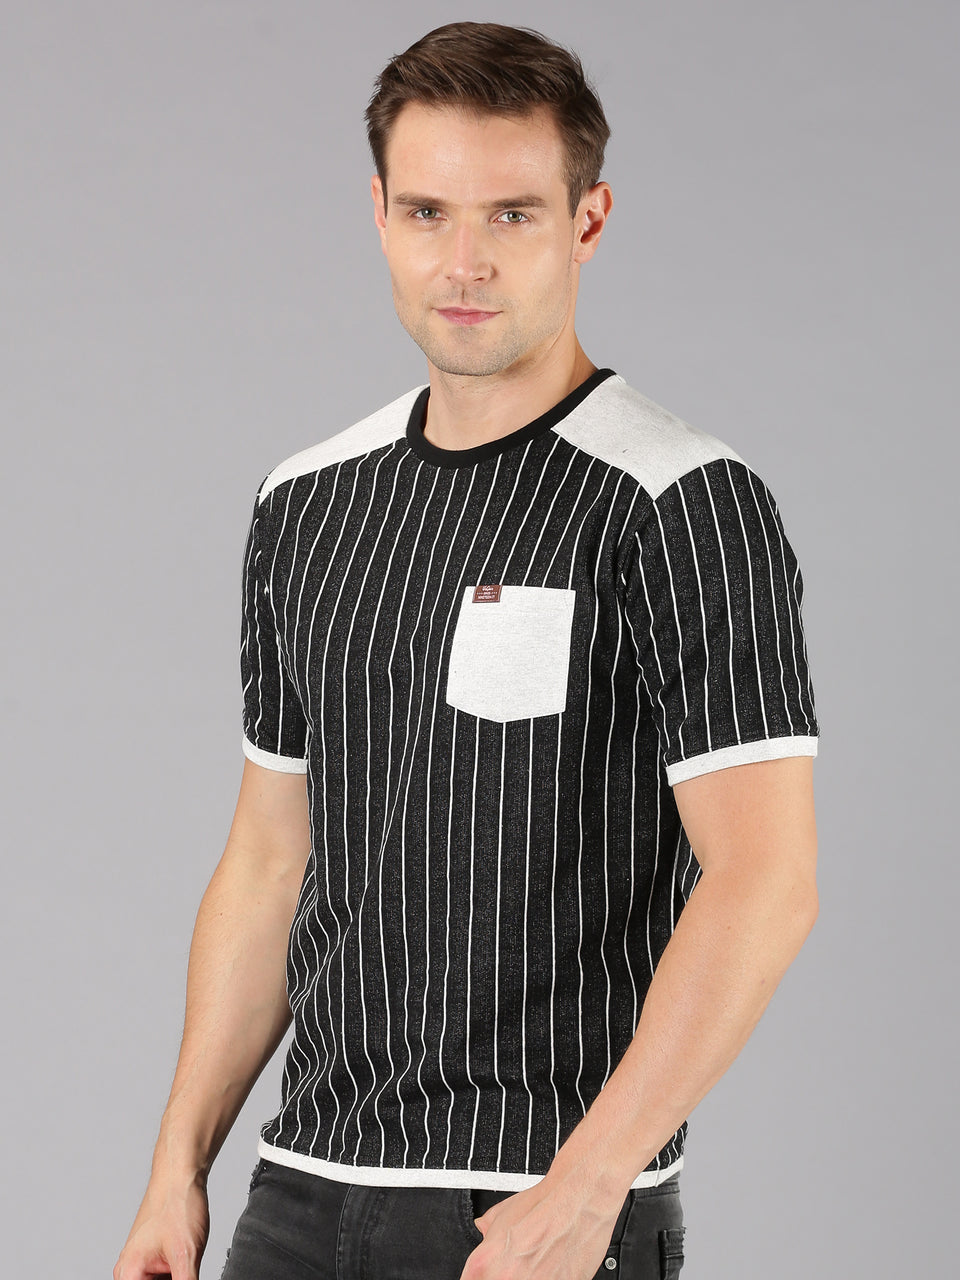 Men's Ultimate Black T Shirt – Hudsonwellesley